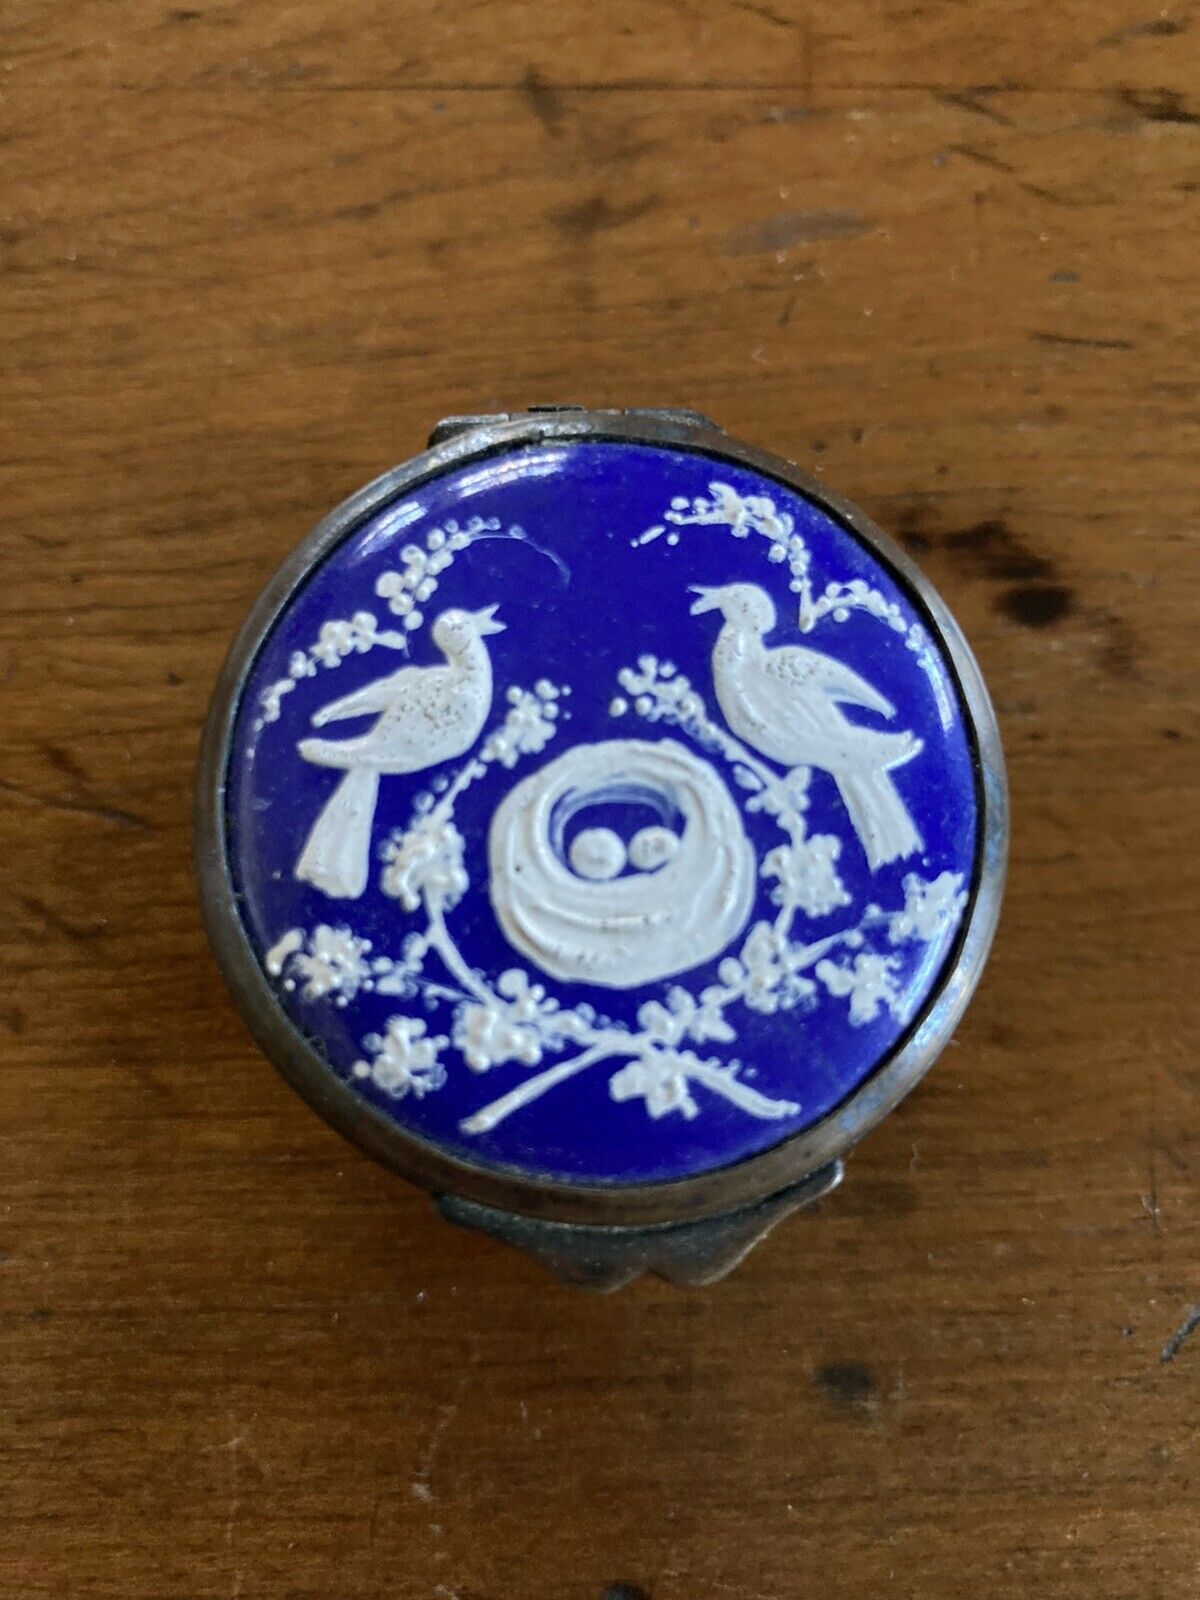 Antique Valuations: Minty Georgian Blue Enamel Snuff Box c.1780 w/ Raised Glaze Detail